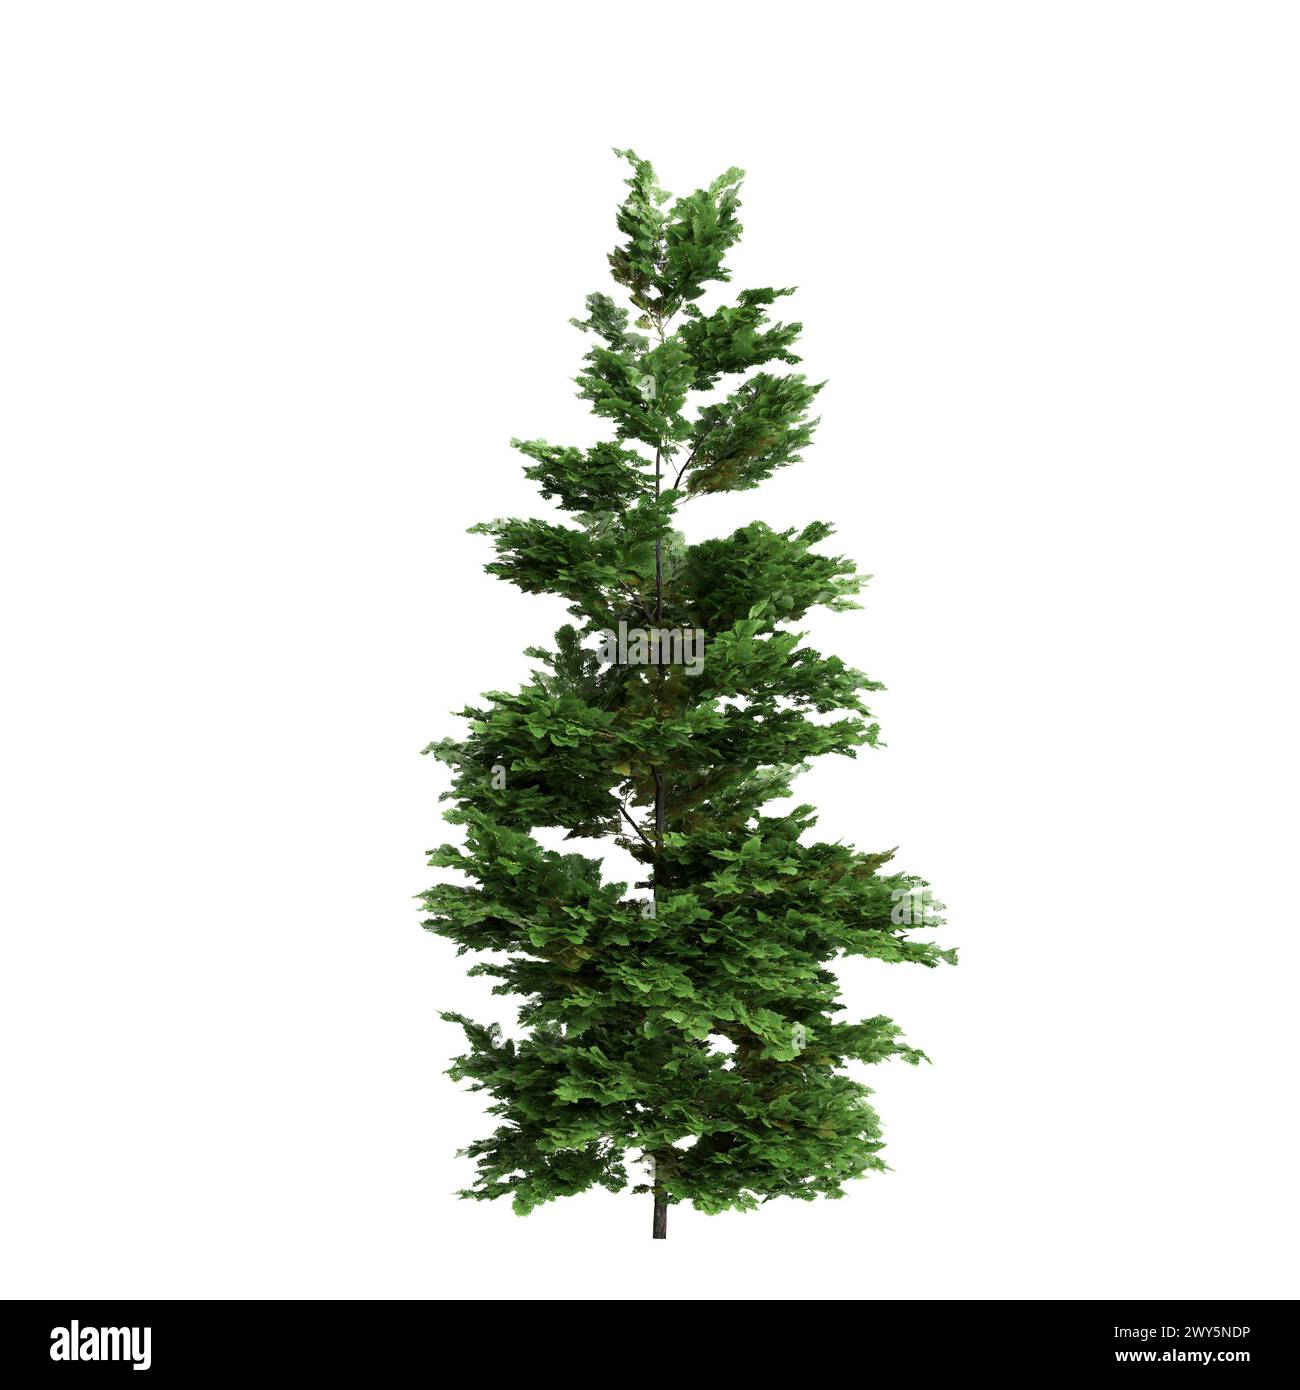 3d illustration of Chamaecyparis obtusa tree isolated on white background Stock Photo